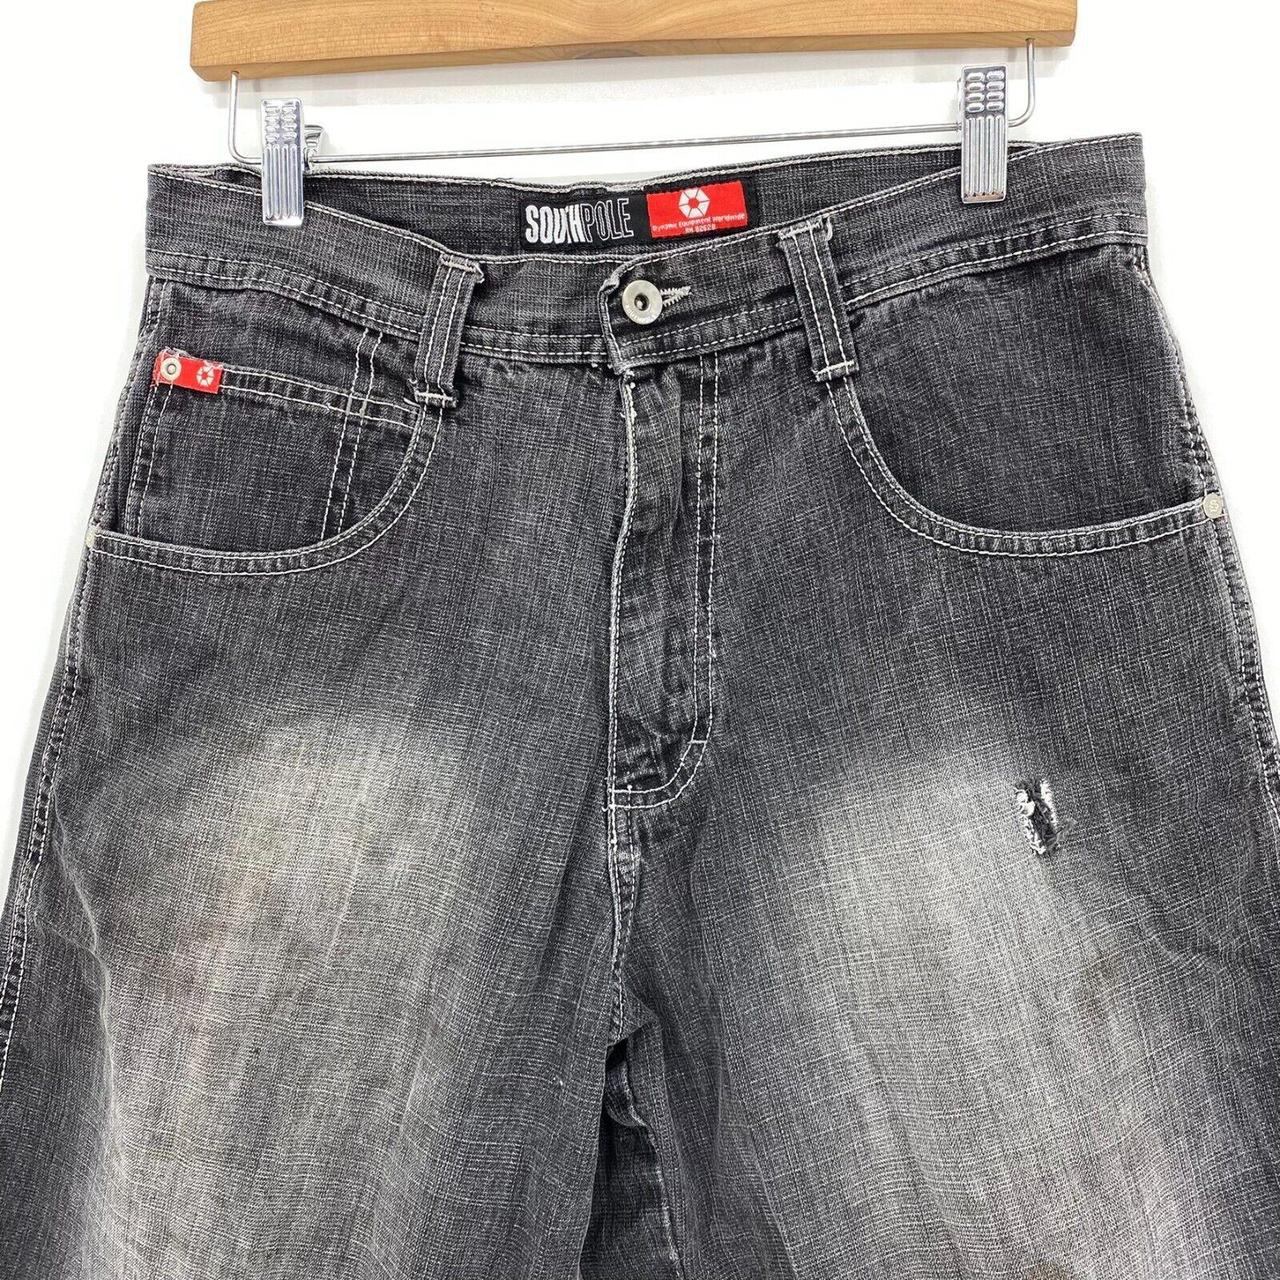 Product Image 3 - South Pole Denim Shorts Men's